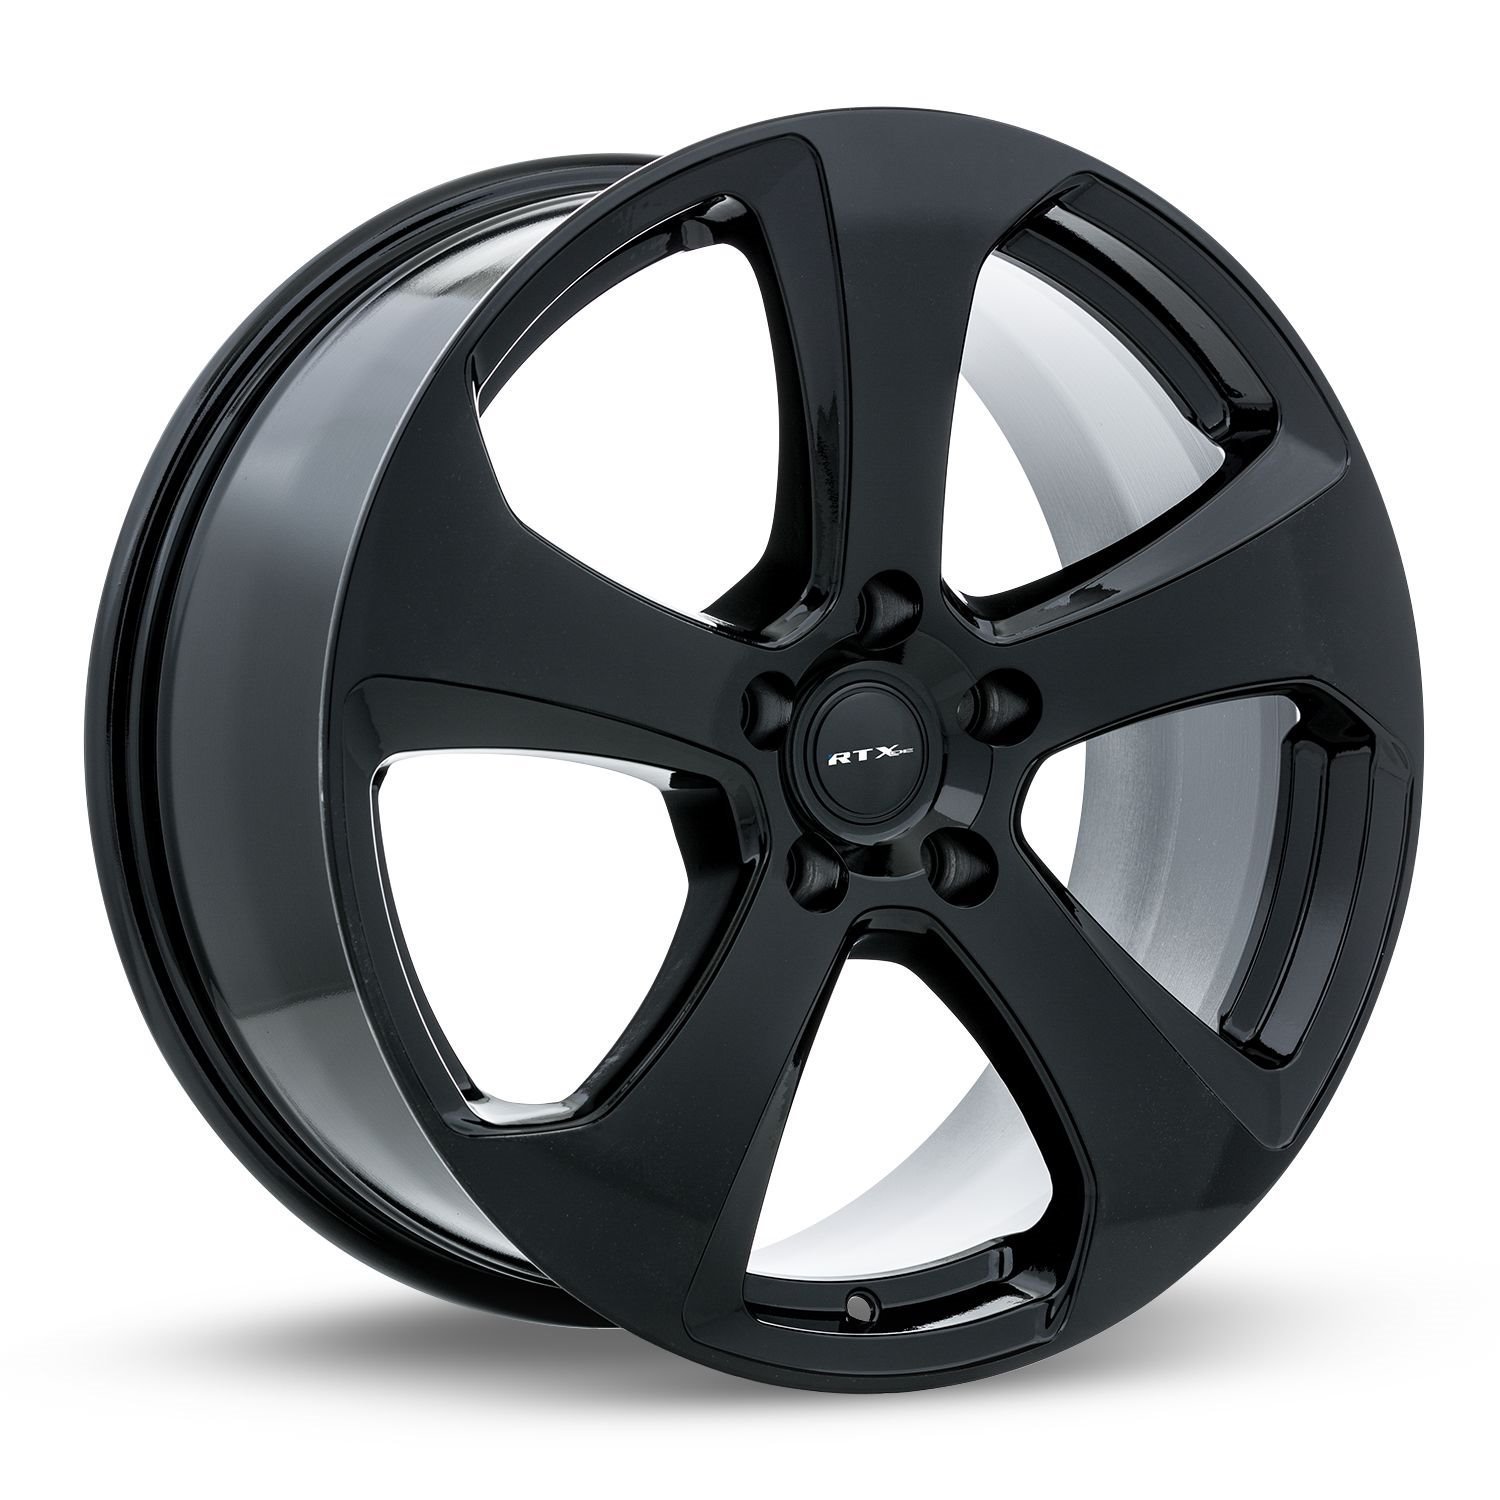 082890 OE-Series MK7 Wheel [Size: 17" x 7.50"] Gloss Black Finish